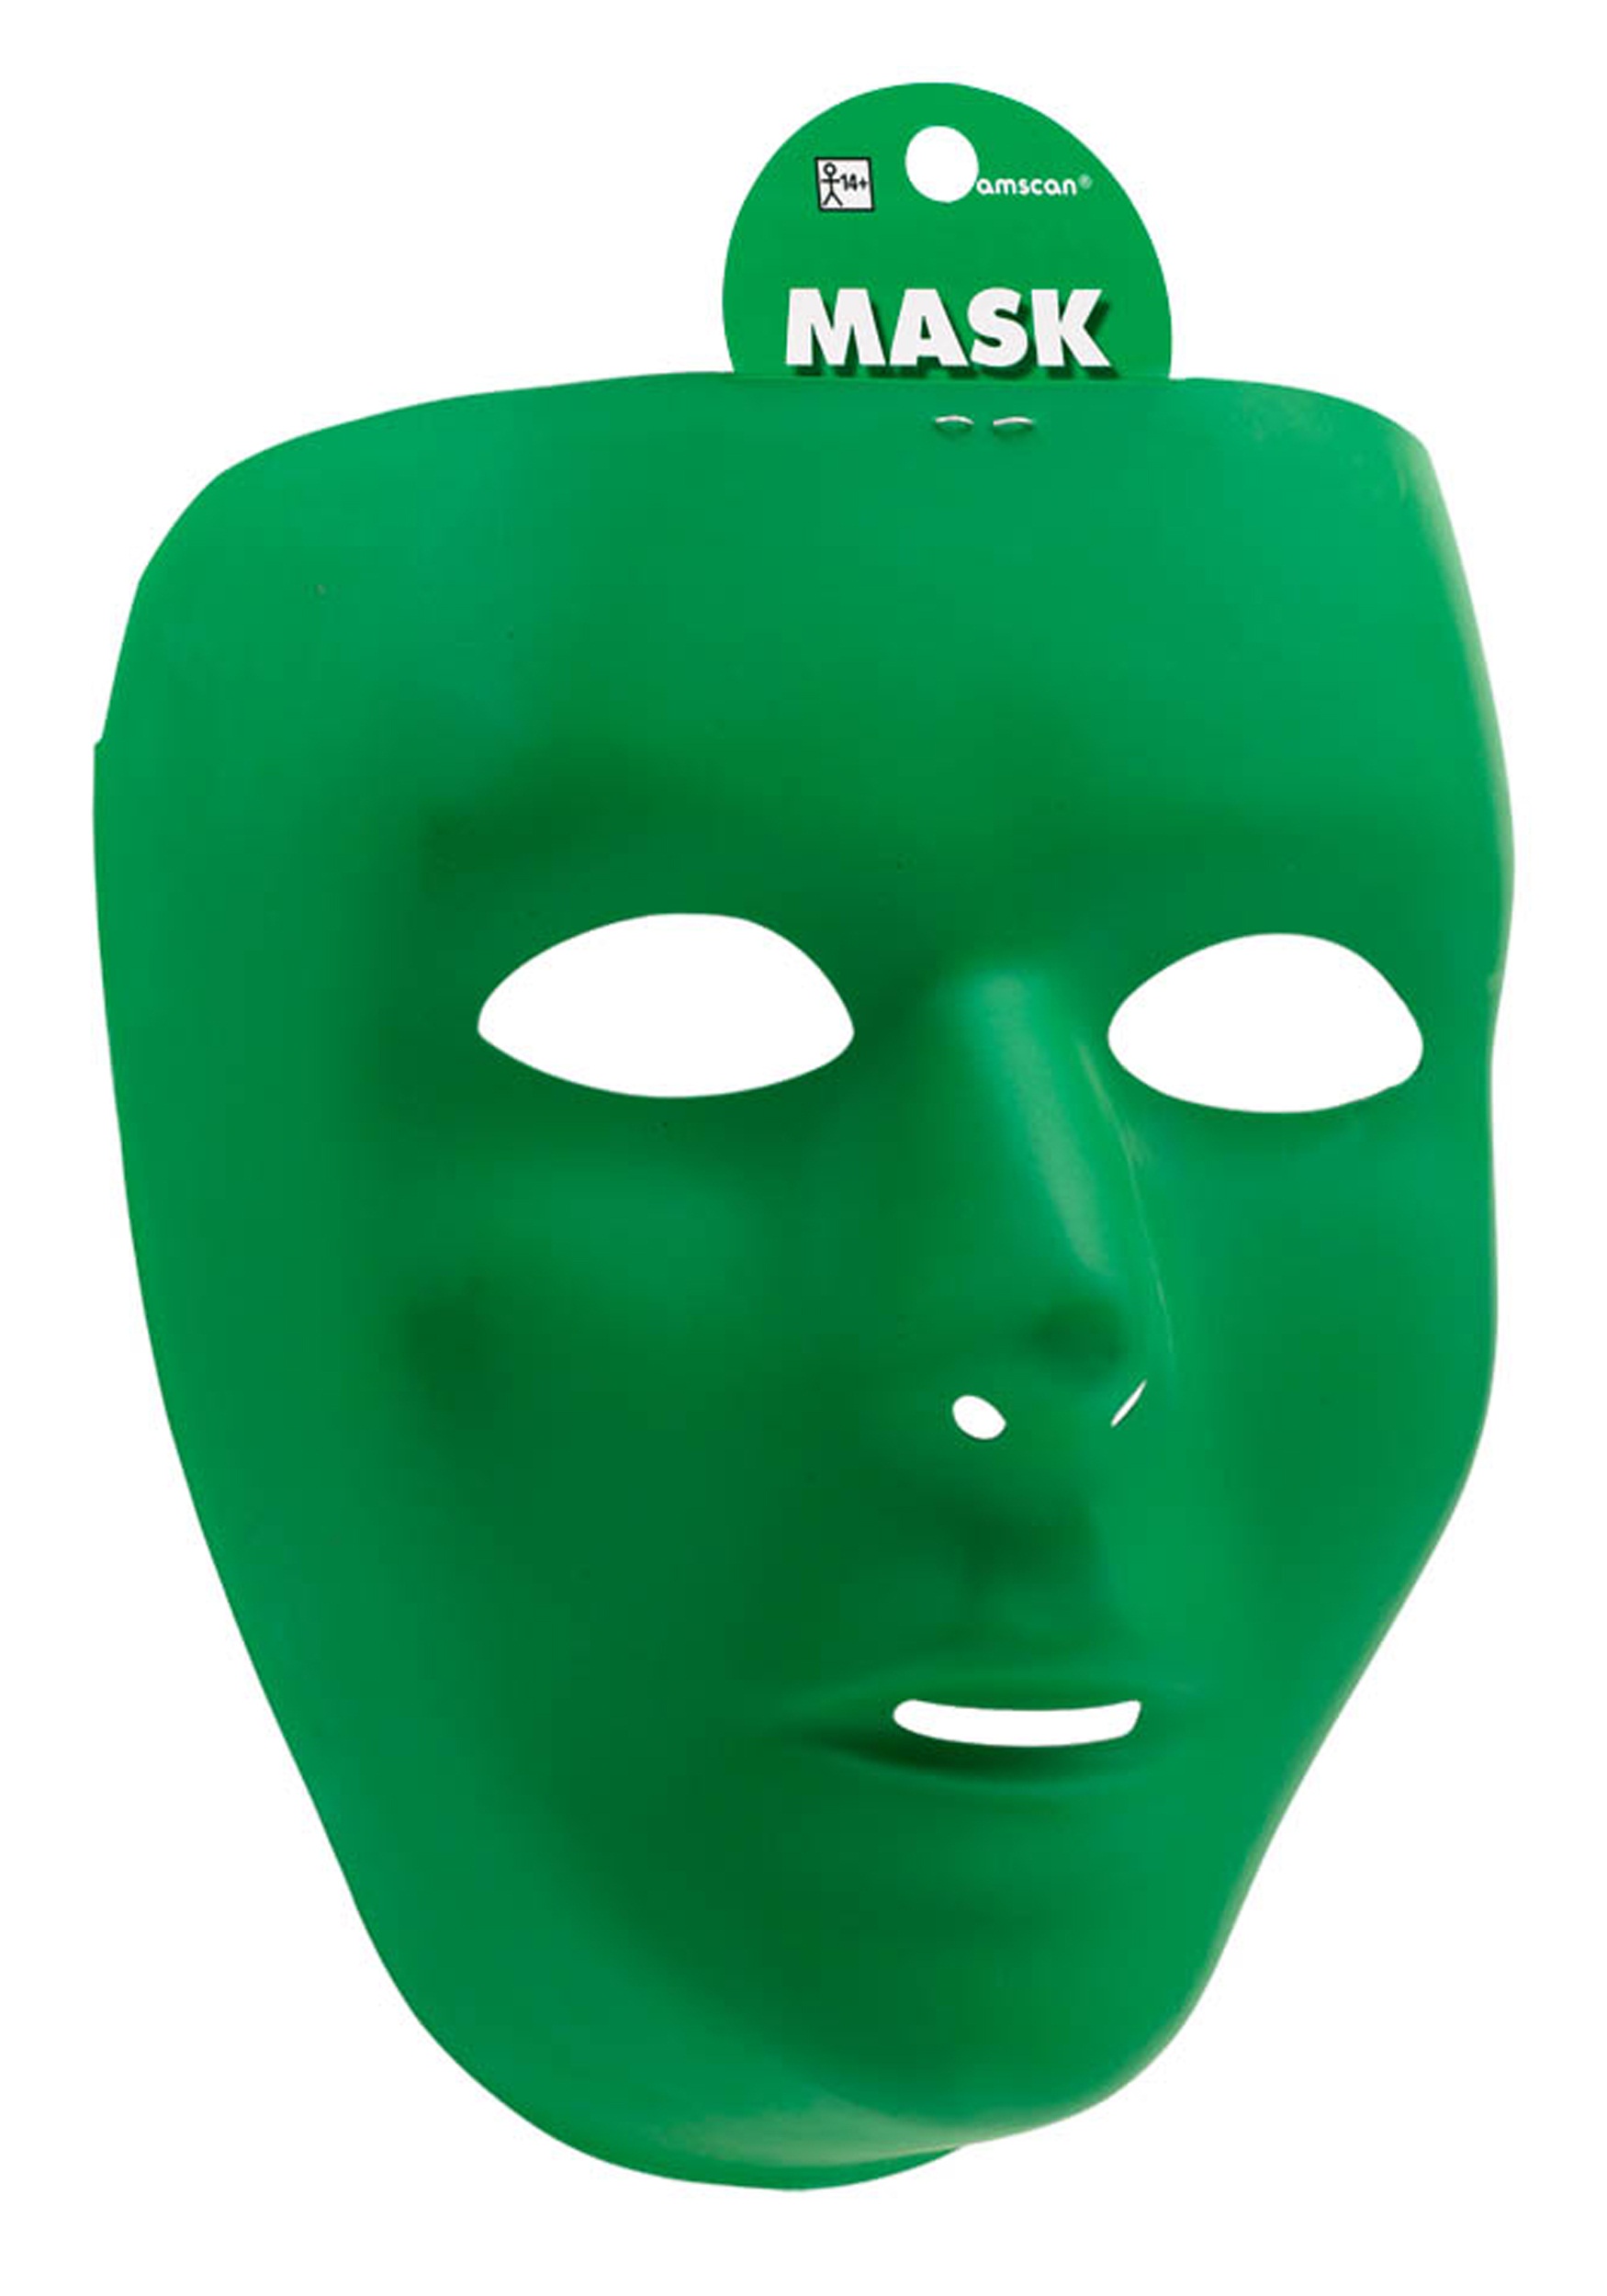 Заказать маски для лица. Маска Carnival Green. МАМАСЬКА. Саска. Маска пластиковая.